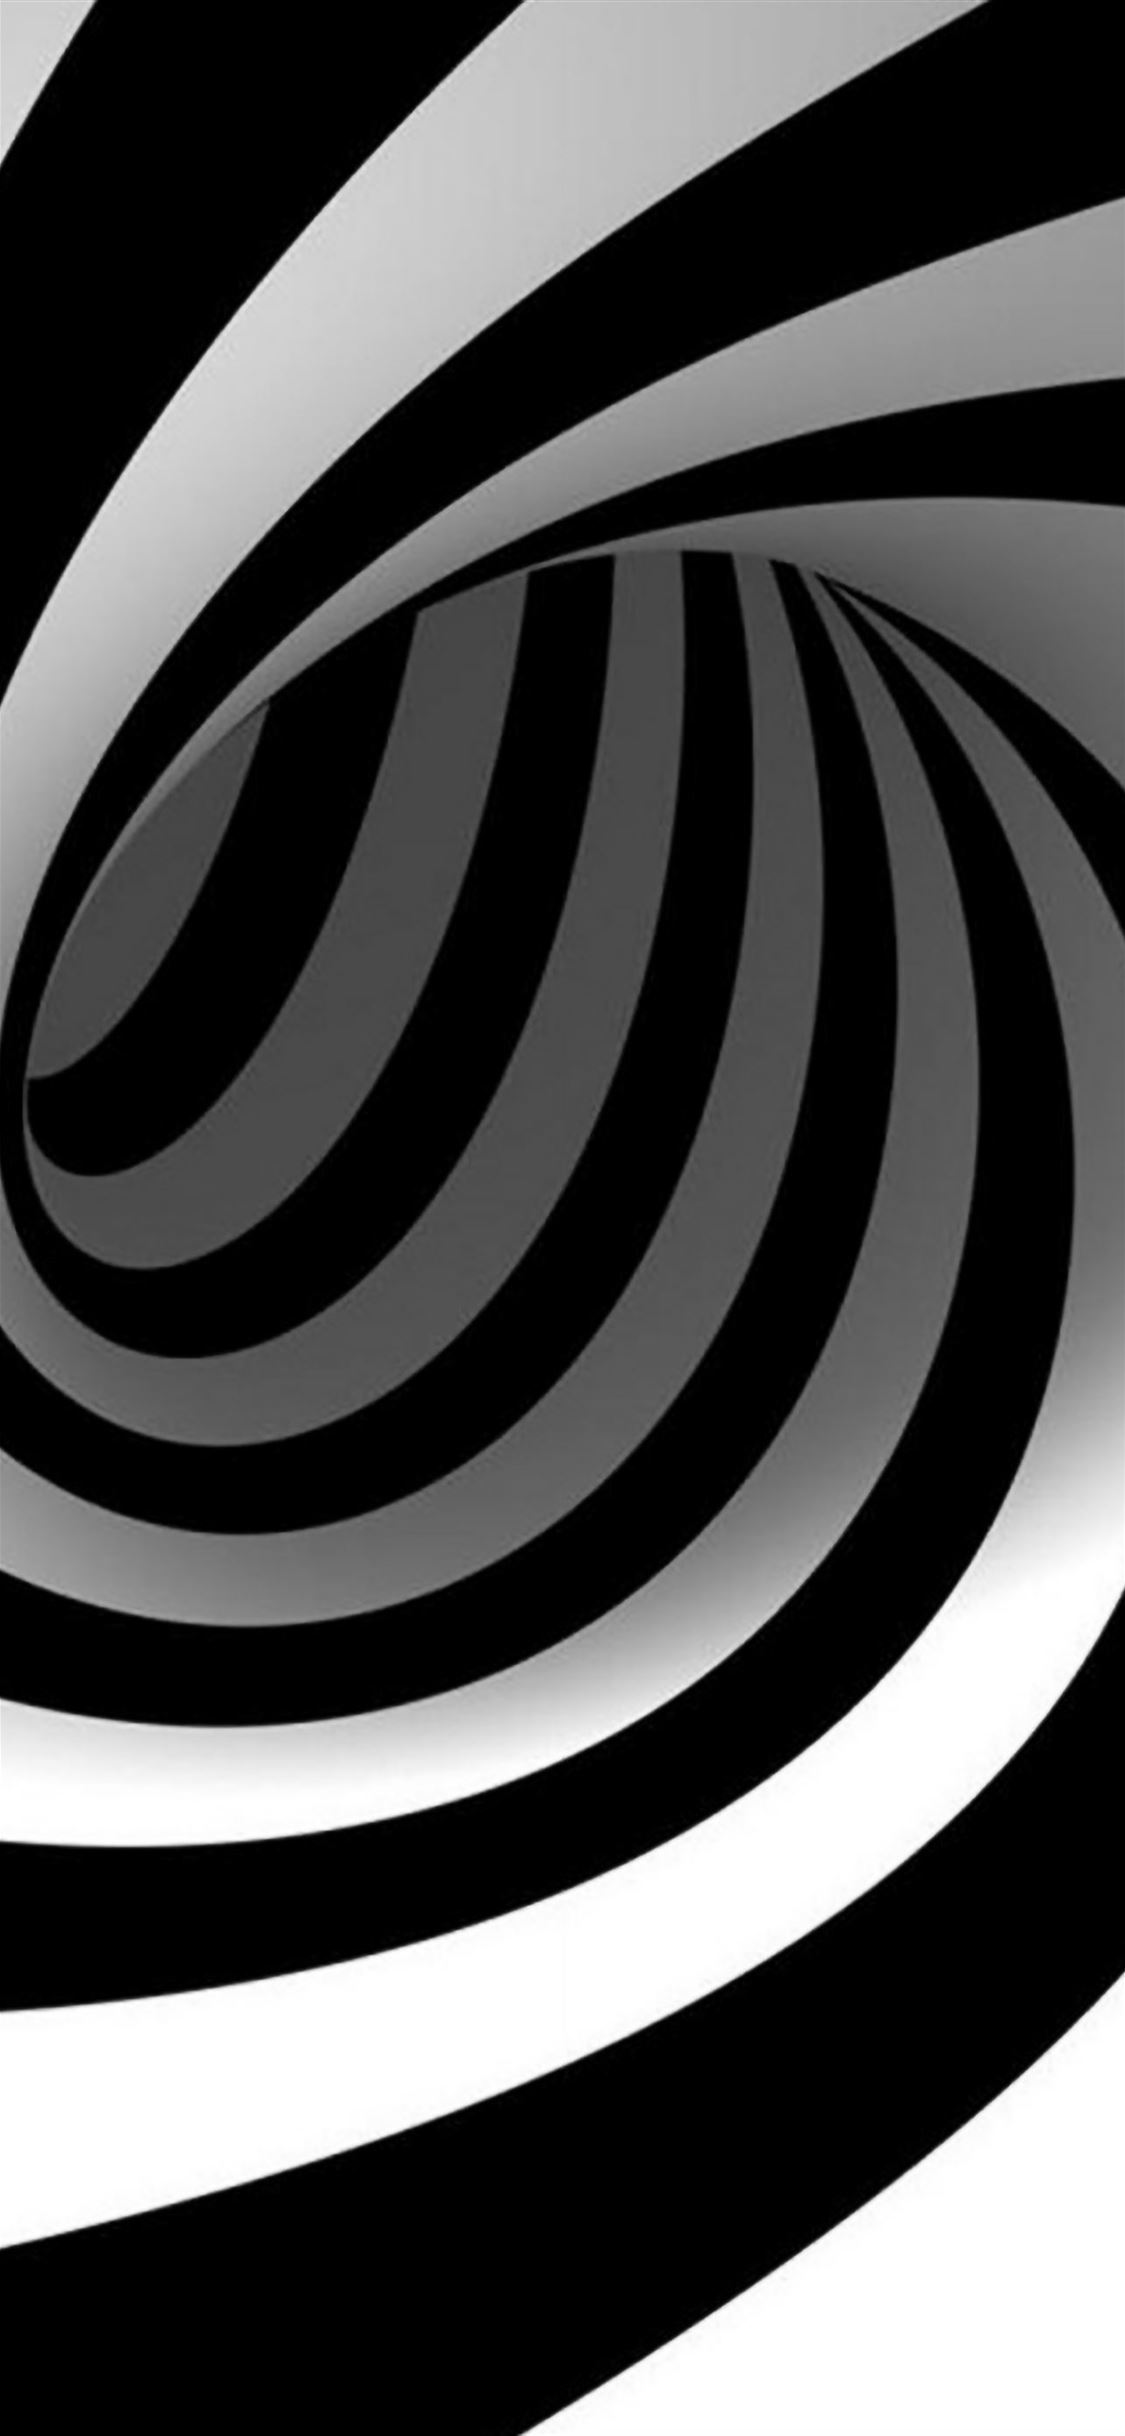 3D Abstract Swirl iPhone wallpaper 